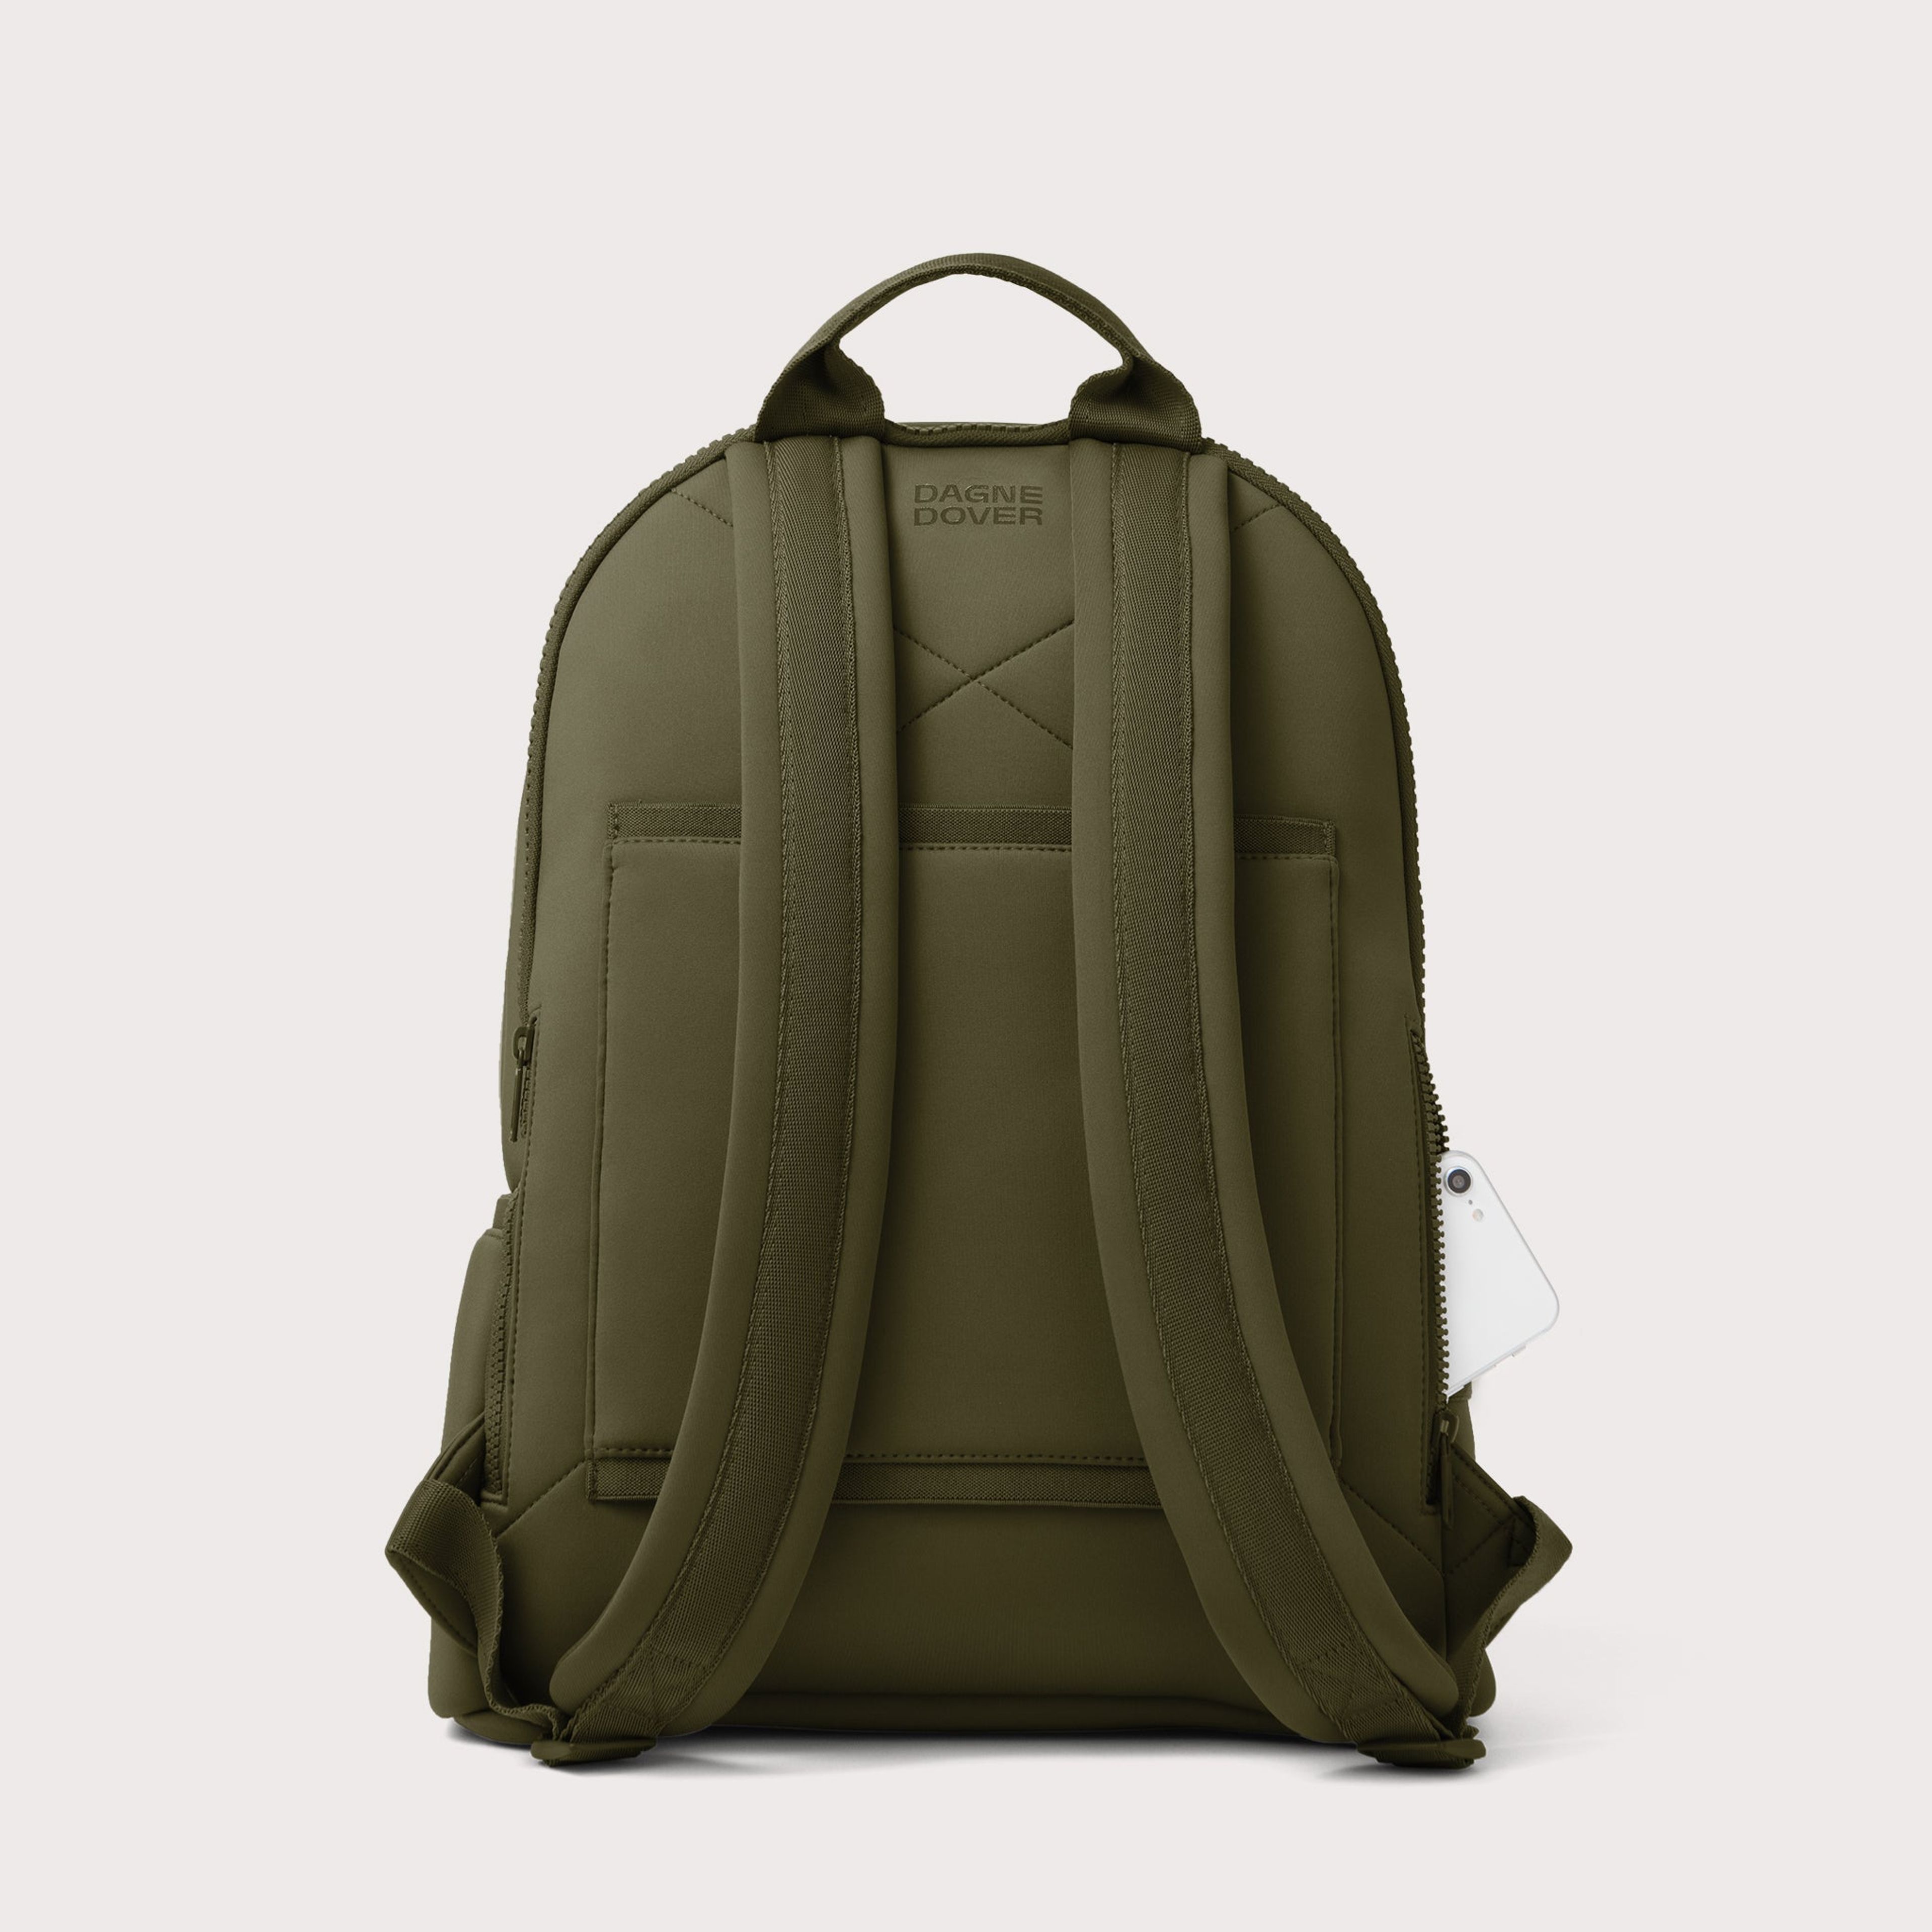 Dakota Backpack in Dark Moss, Large